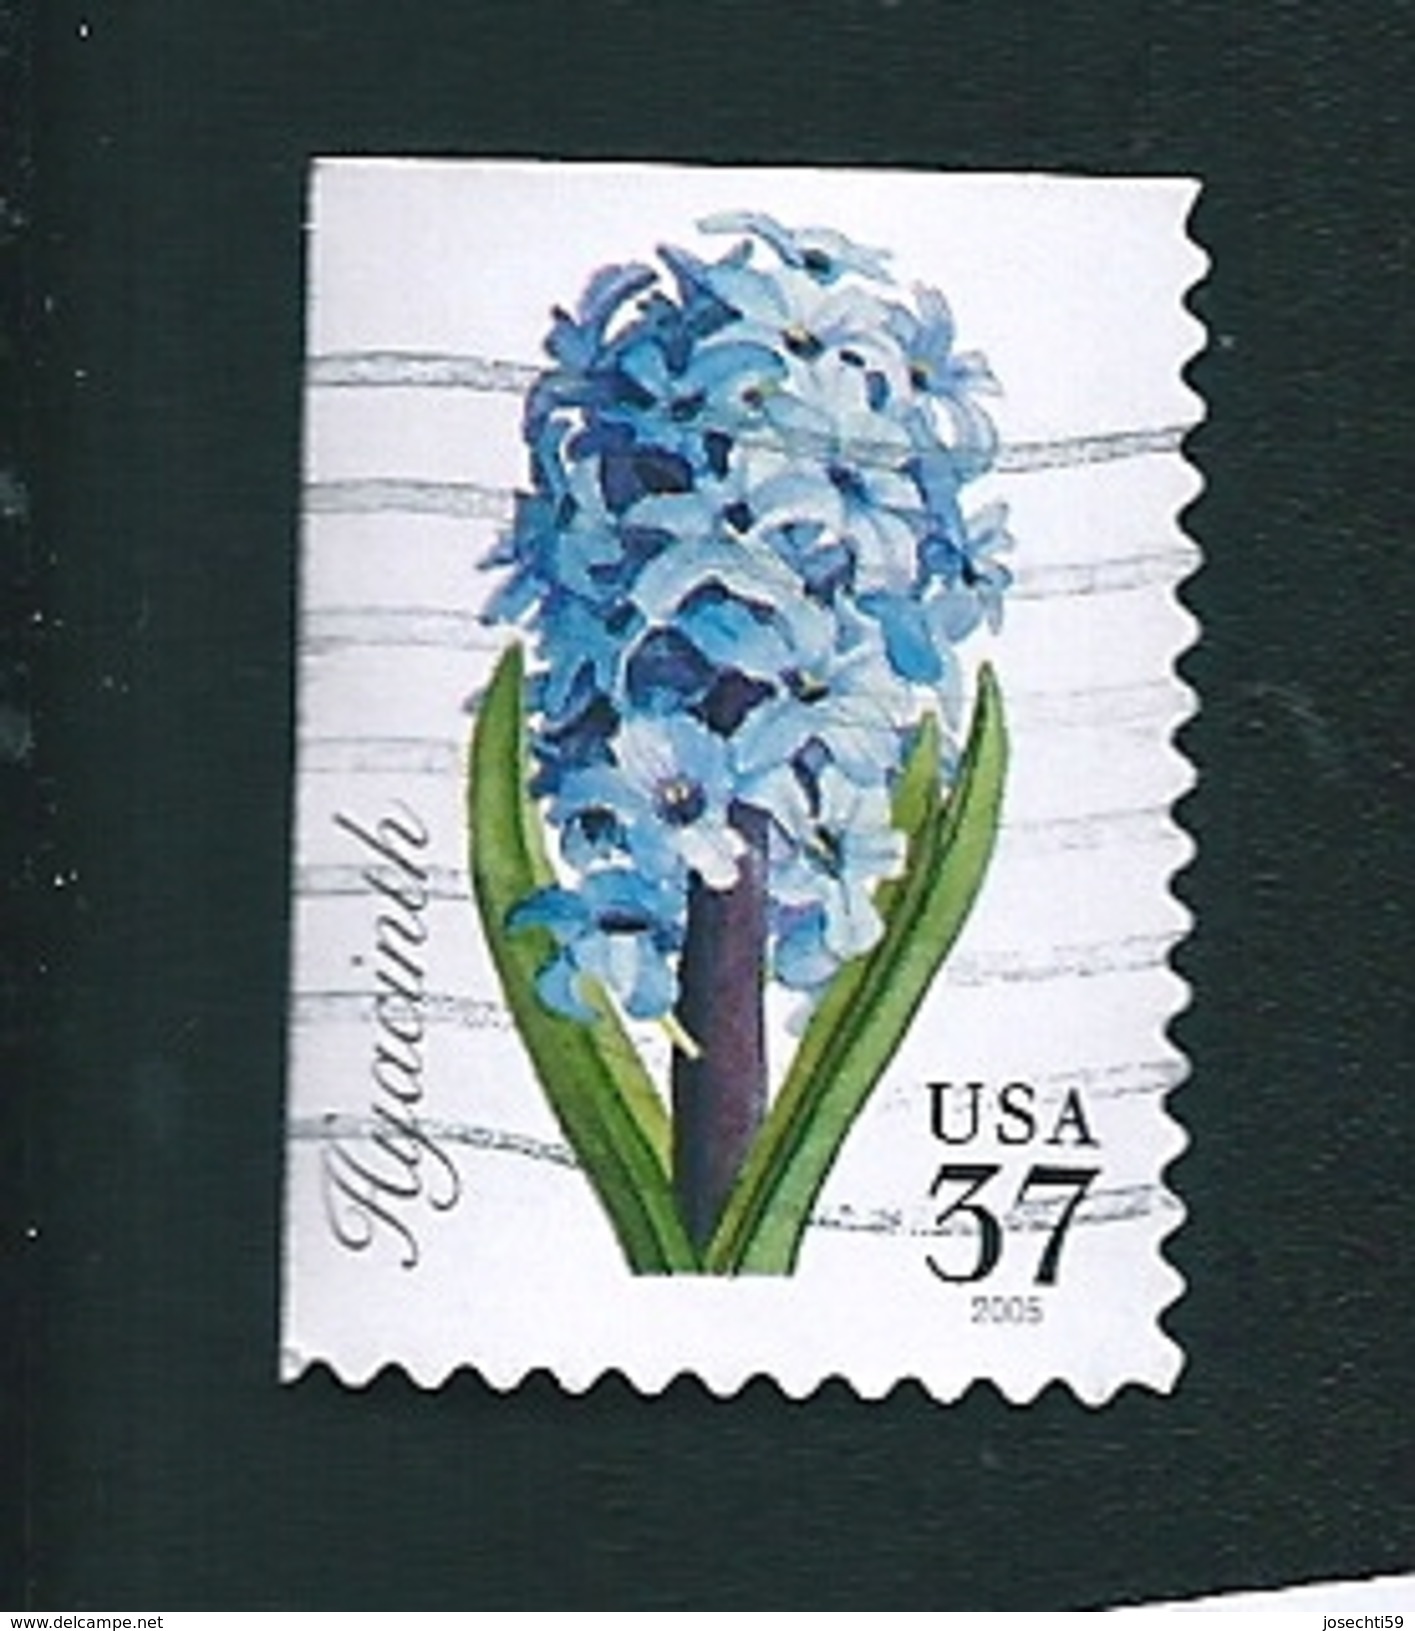 N° 3639 Jacinthe  USA Oblitéré  Etats-Unis (2005) - Used Stamps